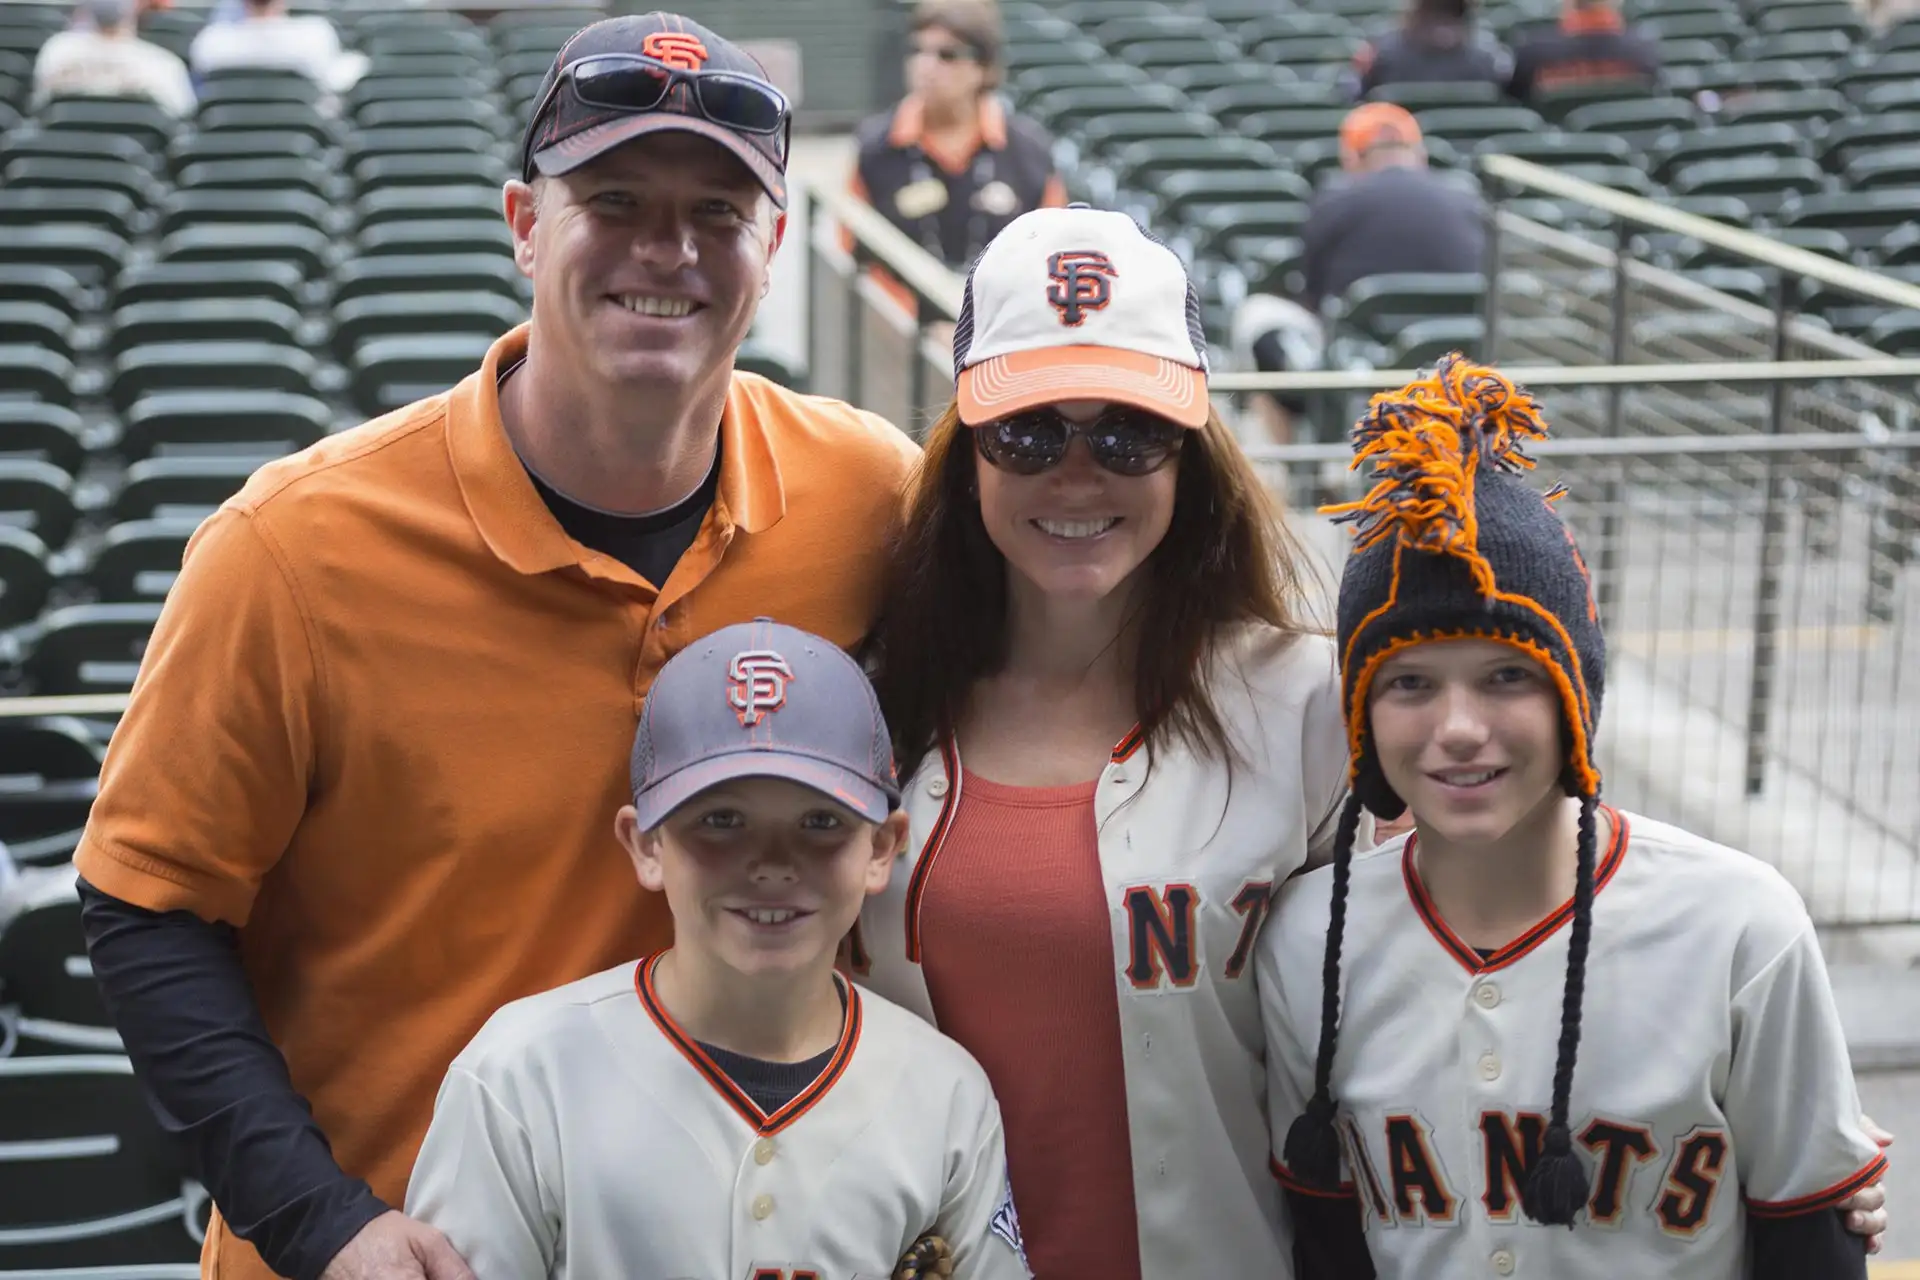 A family at a baseball game in San Francisco, California.